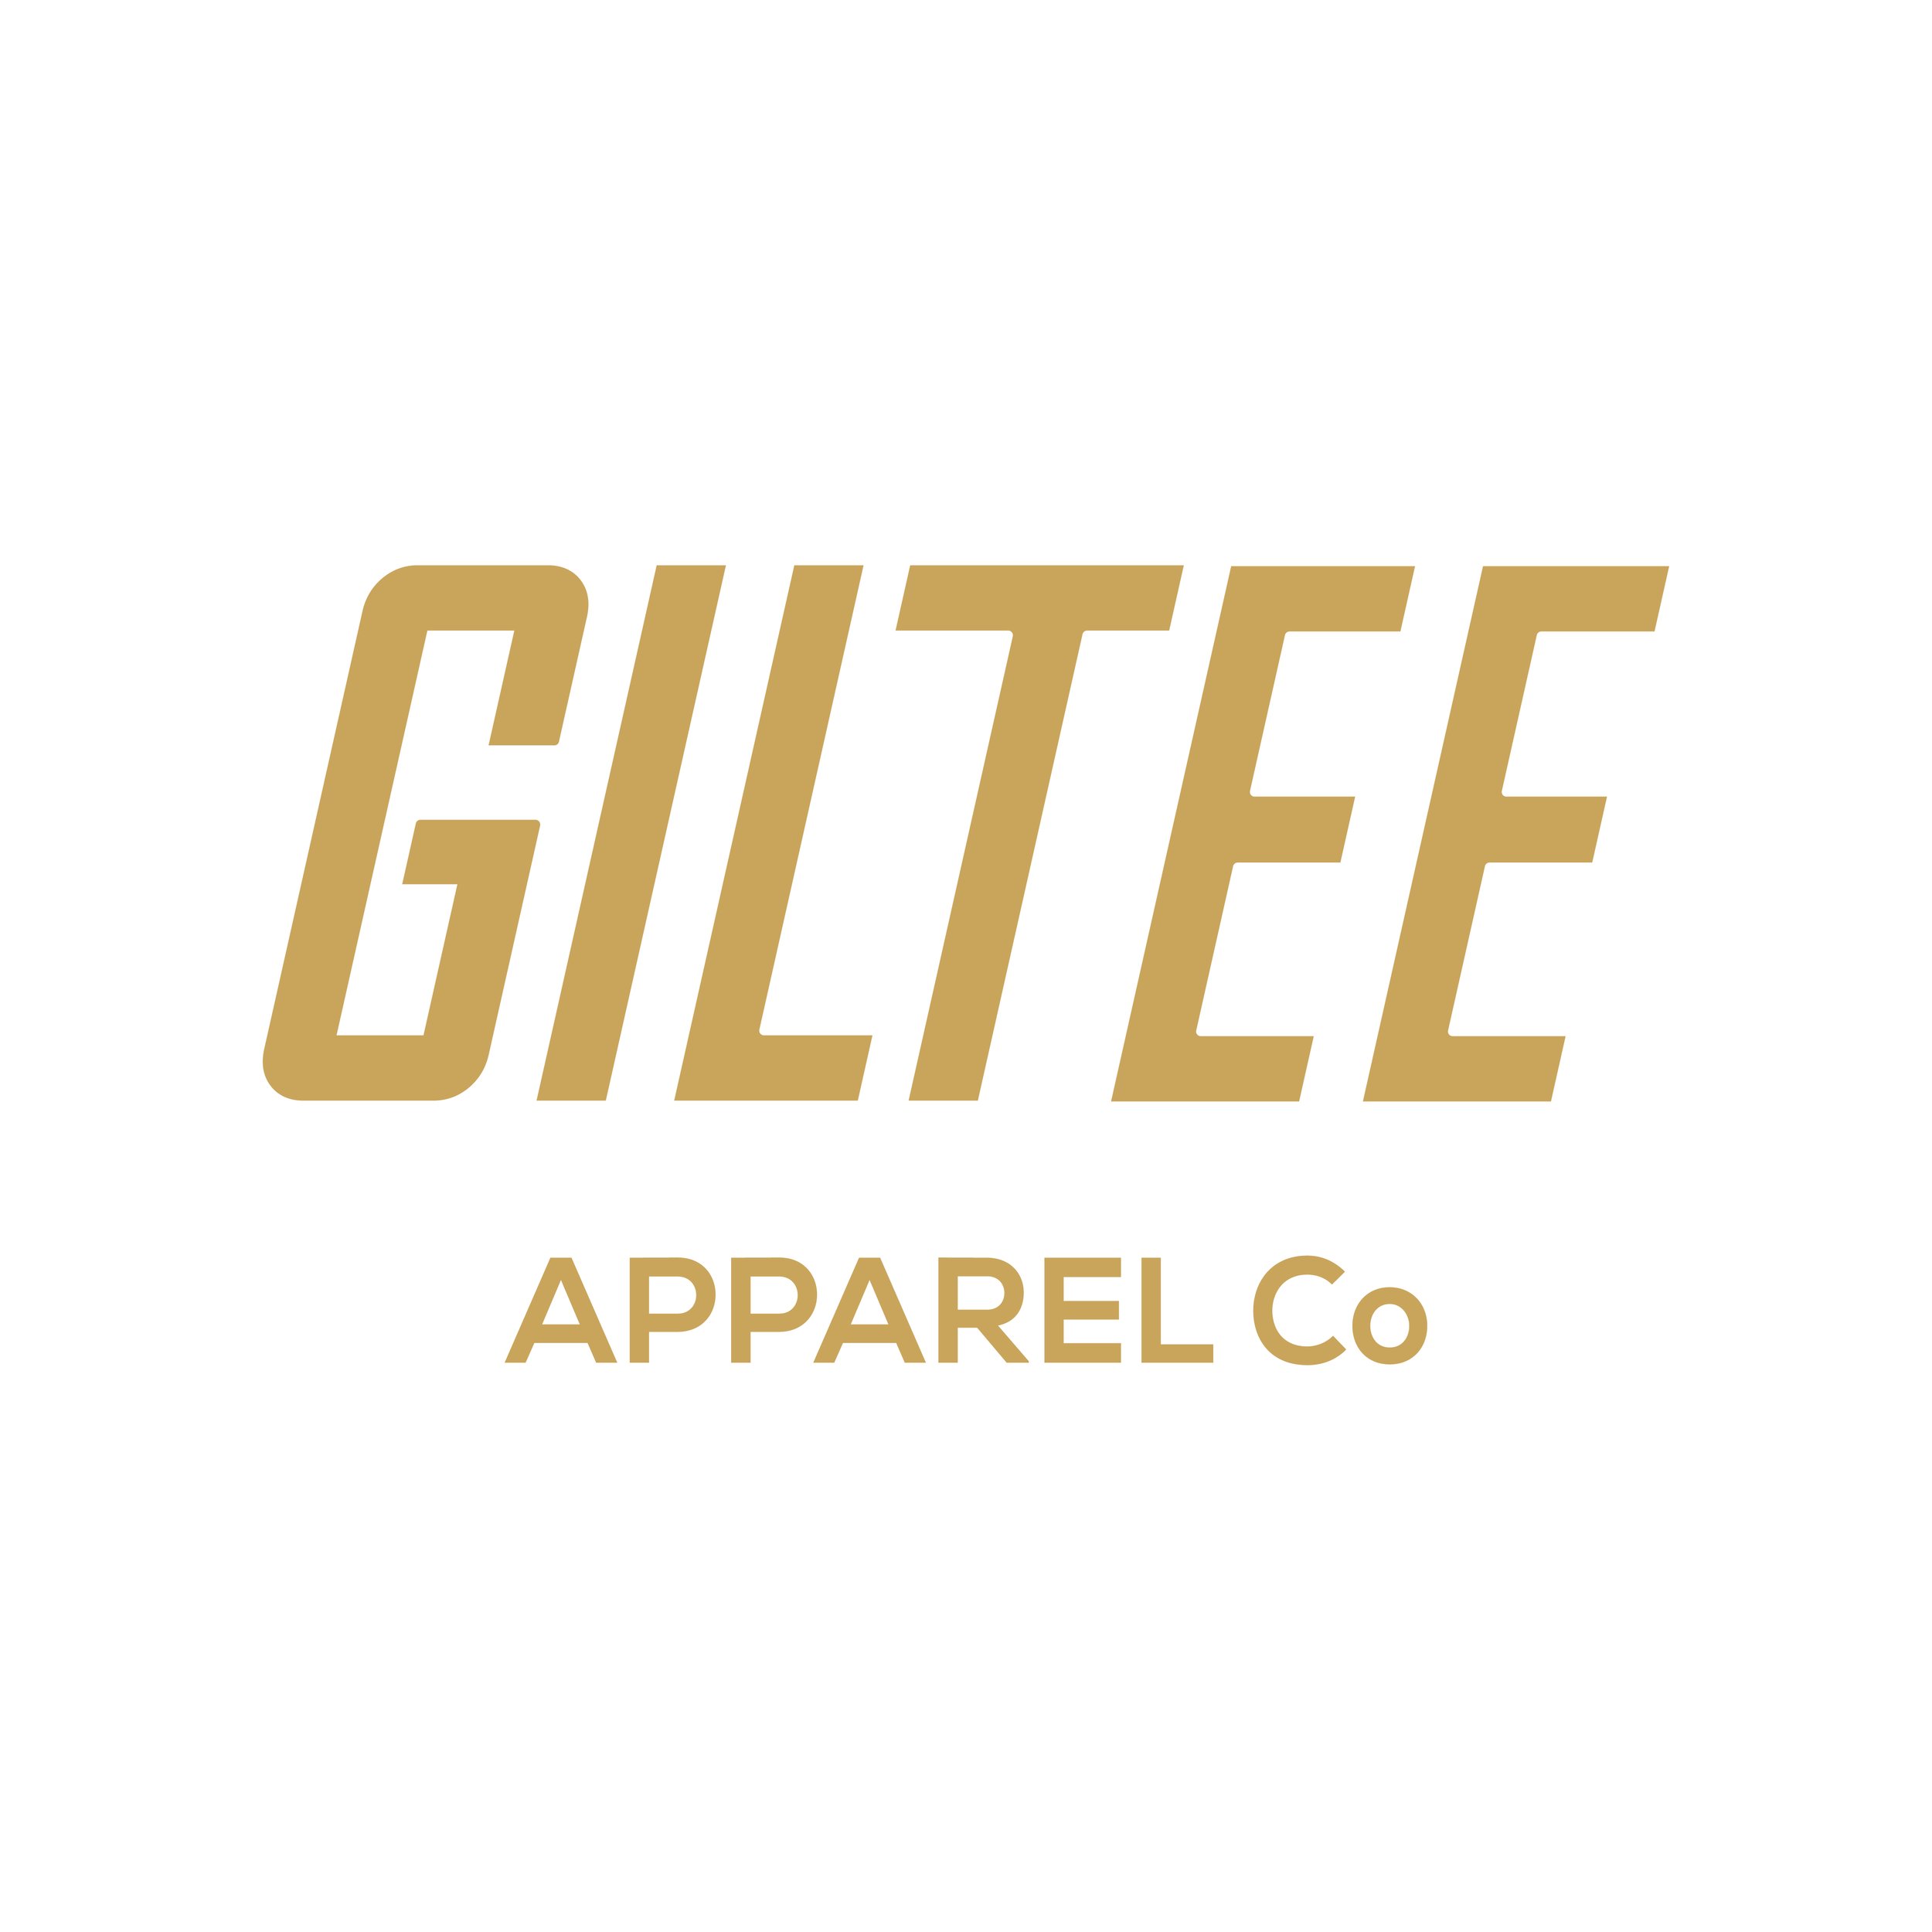 Giltee logo.jpeg